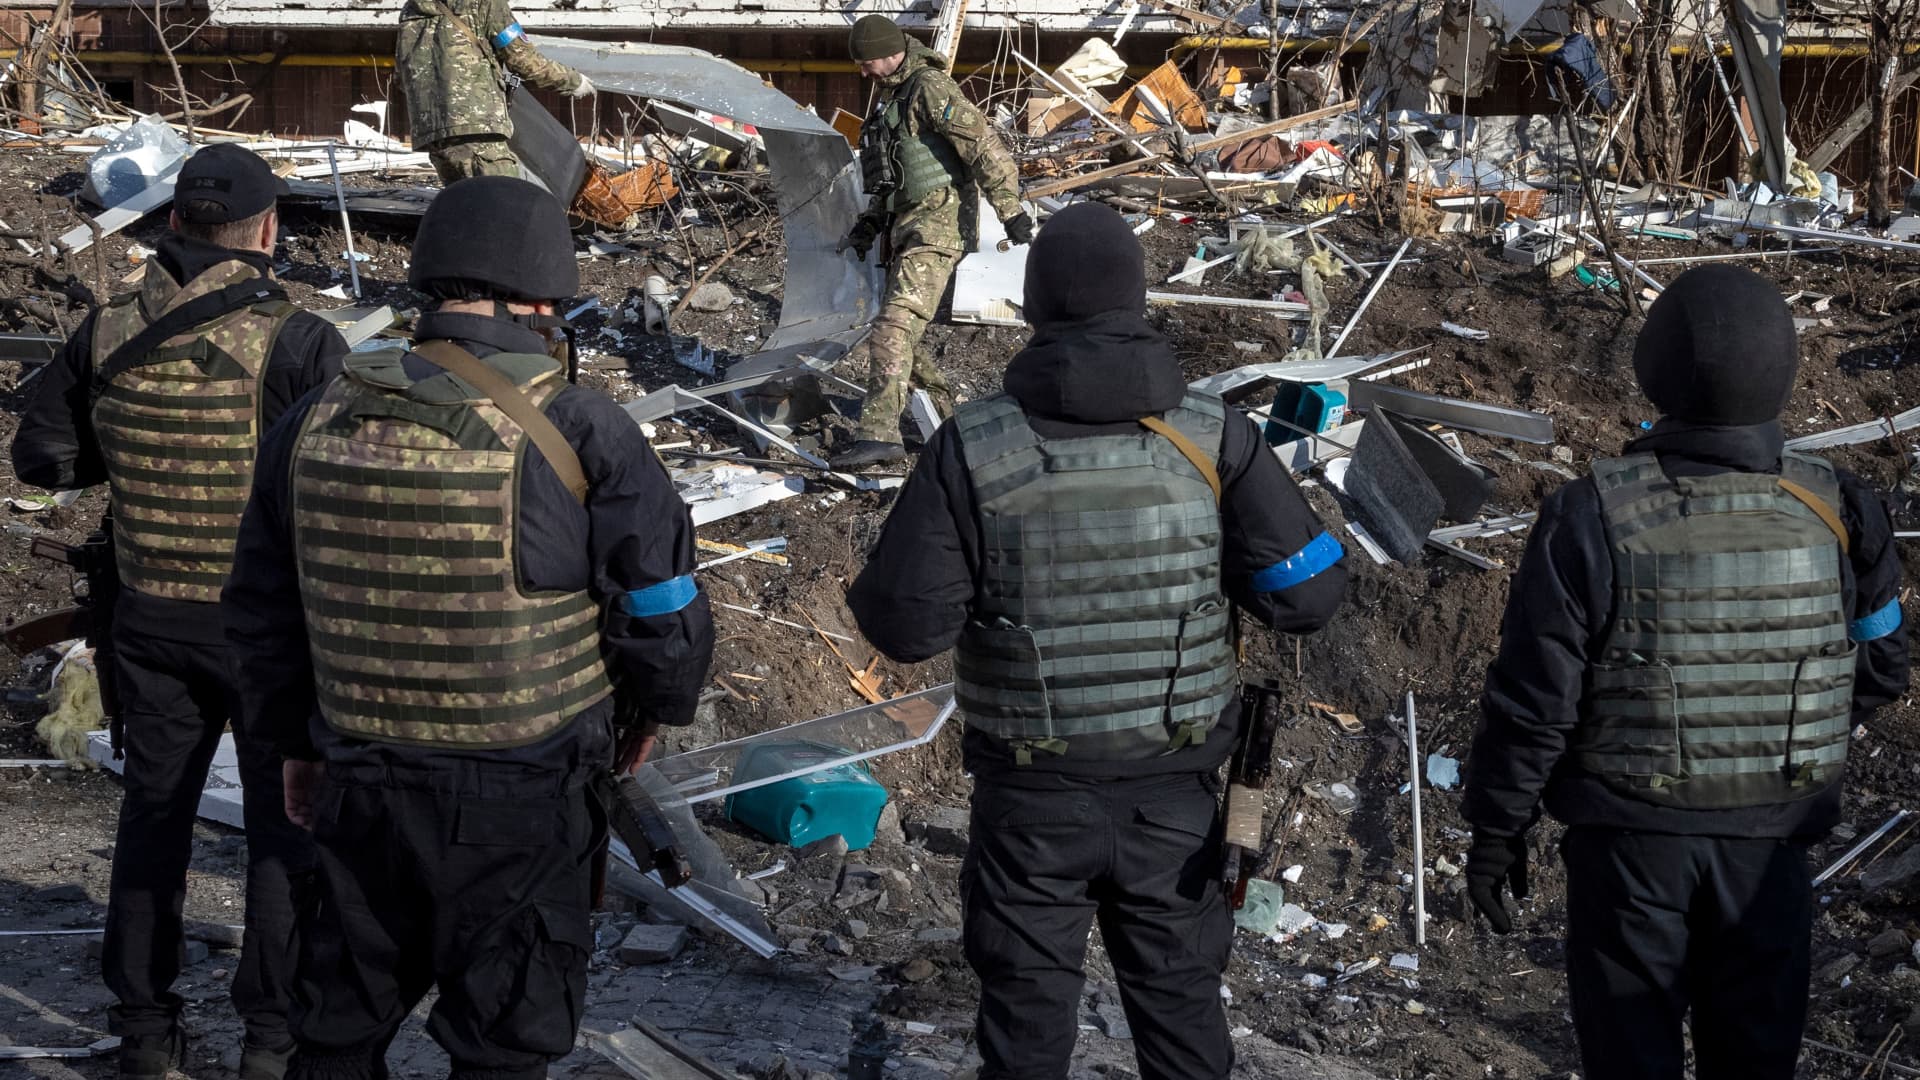 Putin’s Russia looks increasingly desperate as Ukraine war nears stalemate, analysts say